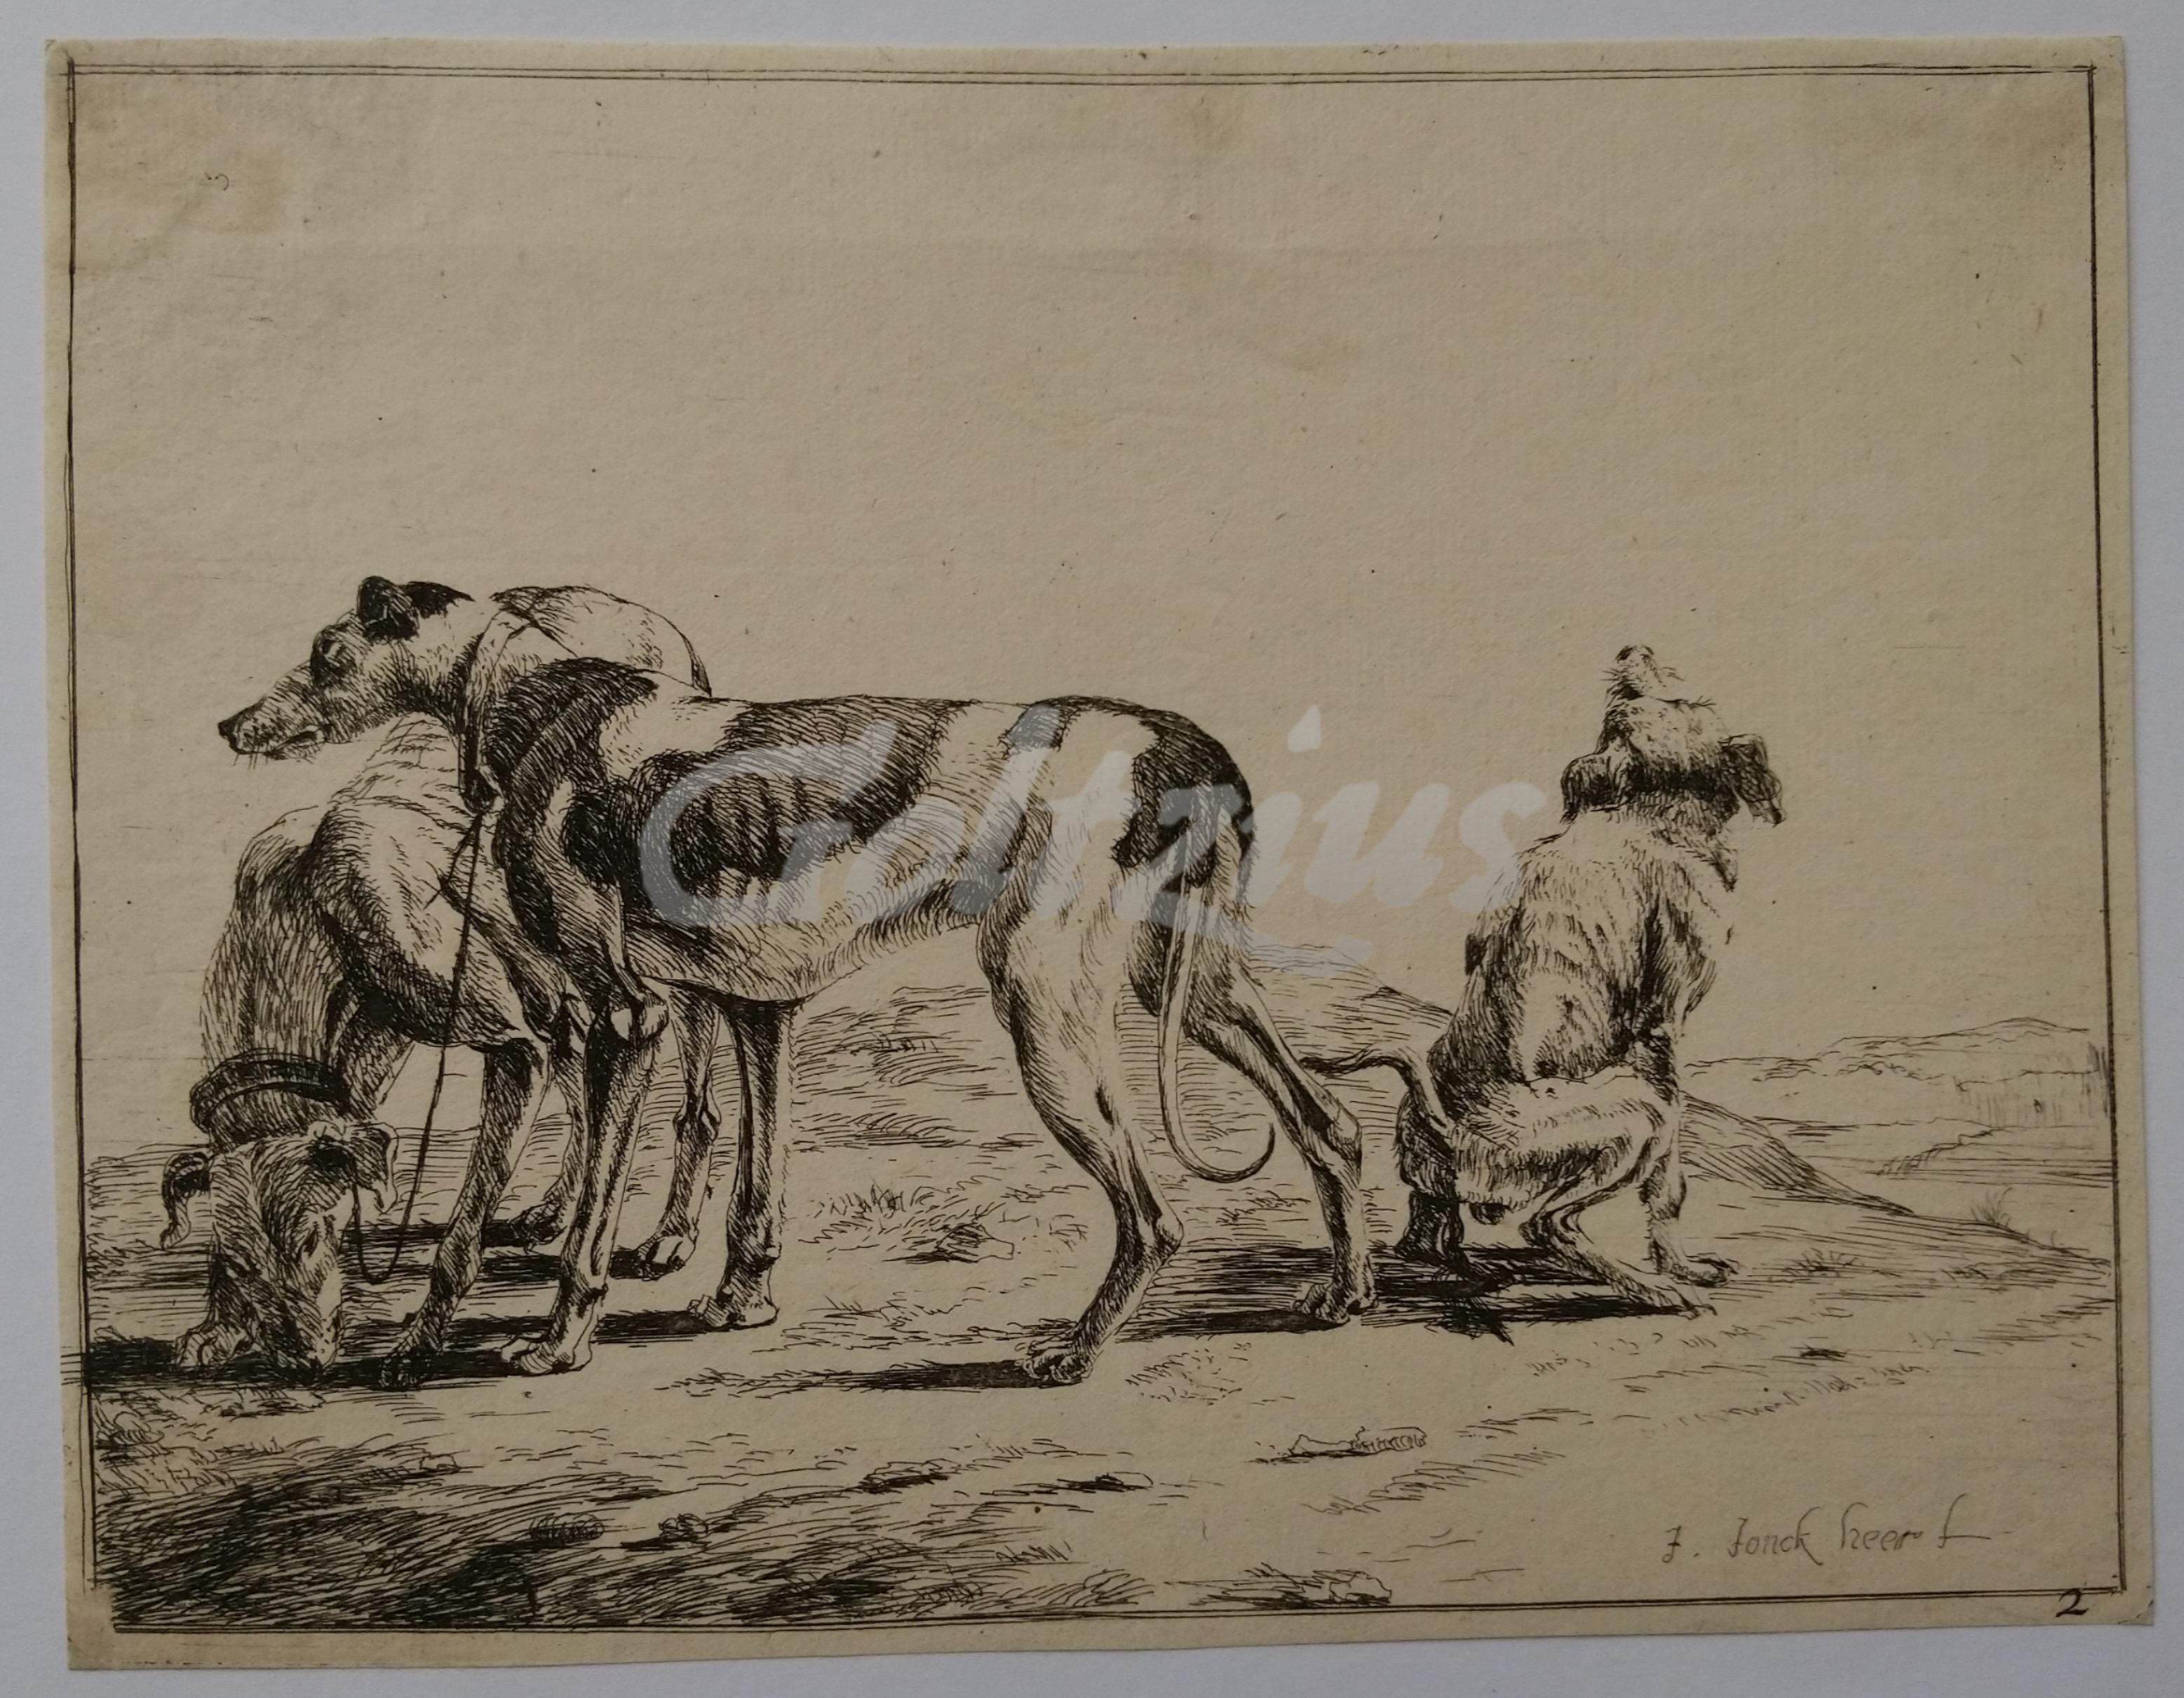 JONCKHEER, JACOB DE, Three greyhounds in a landscape